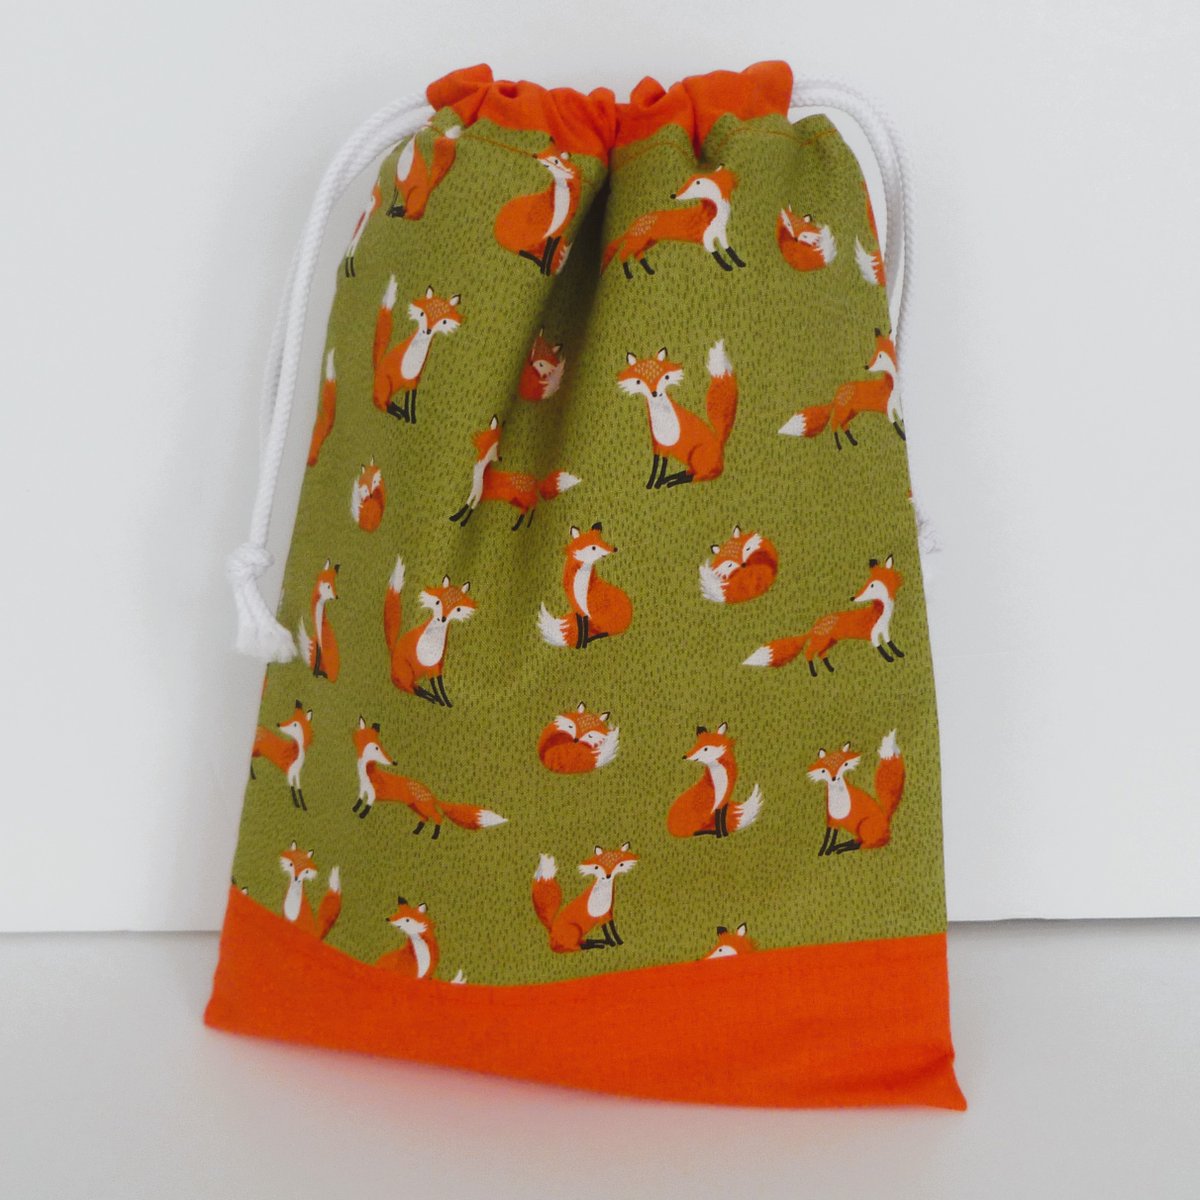 daisychaincraftsukgb.etsy.com/listing/158393…
Handmade Drawstring Bag Fox pattern design
#foxlover #drawstringbag #etsyuk #etsyshop #etsyseller #etsyhandmade #etsy #ecofriendly #reusable #ukmakers #fox